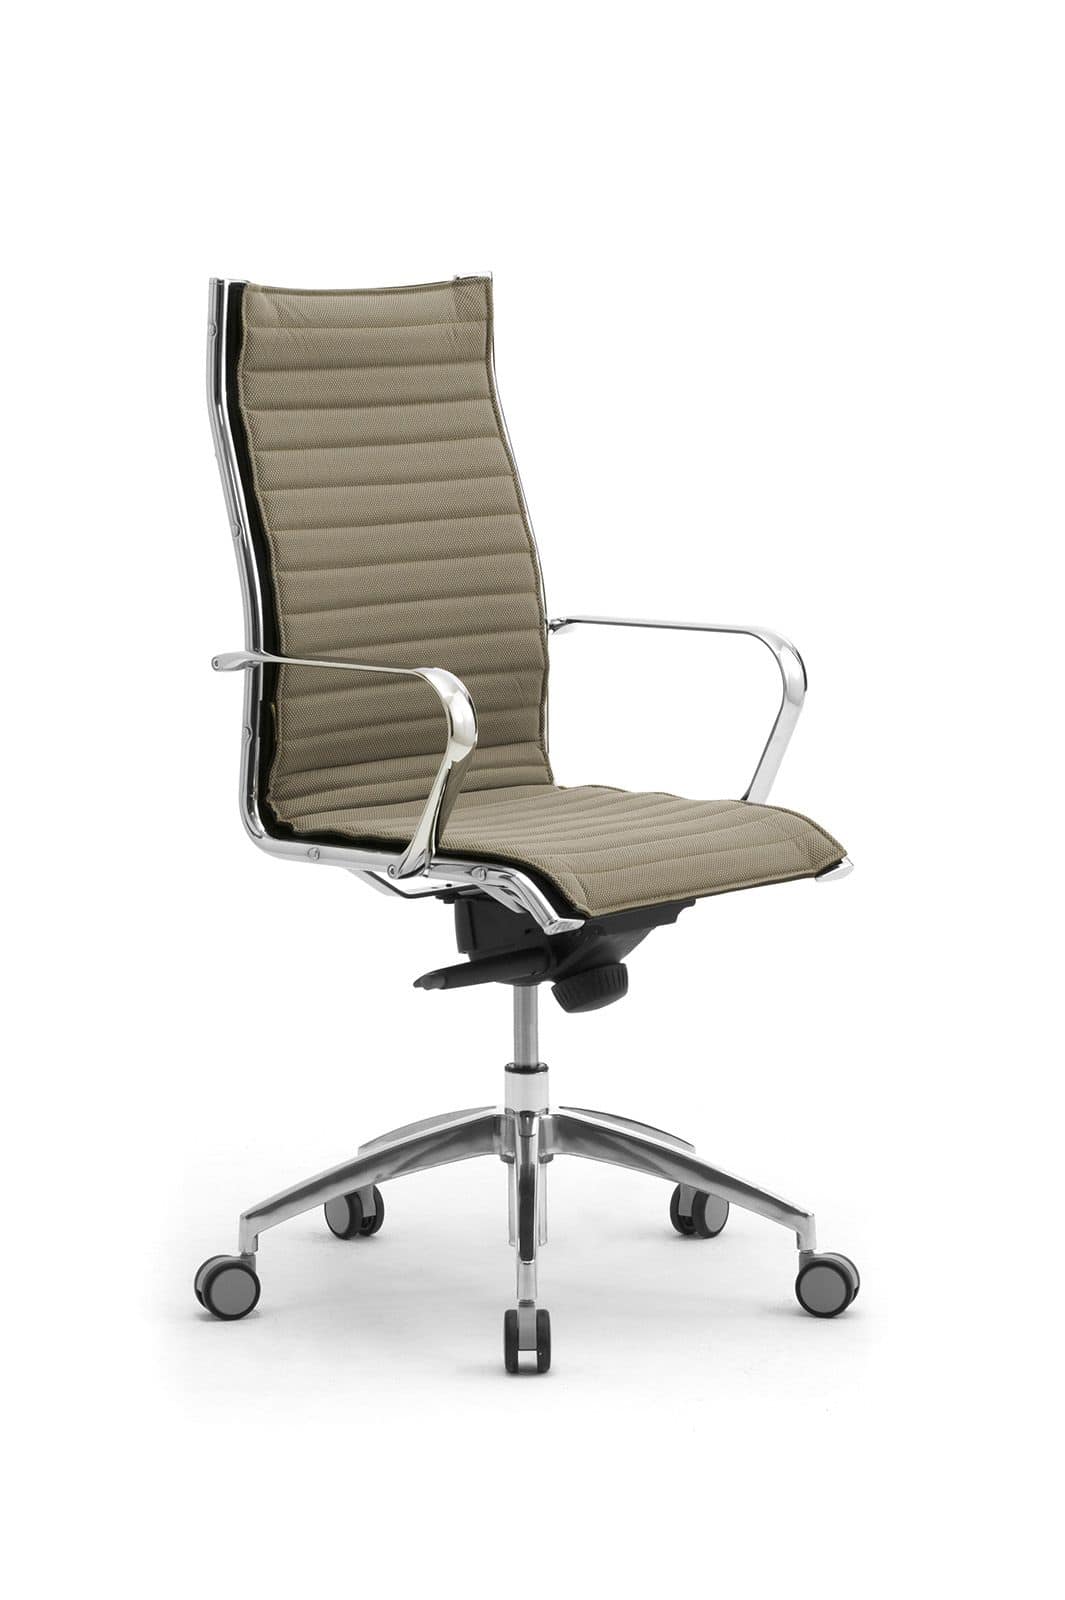 Ergonomic design white mesh office seating with headrest - Leyform